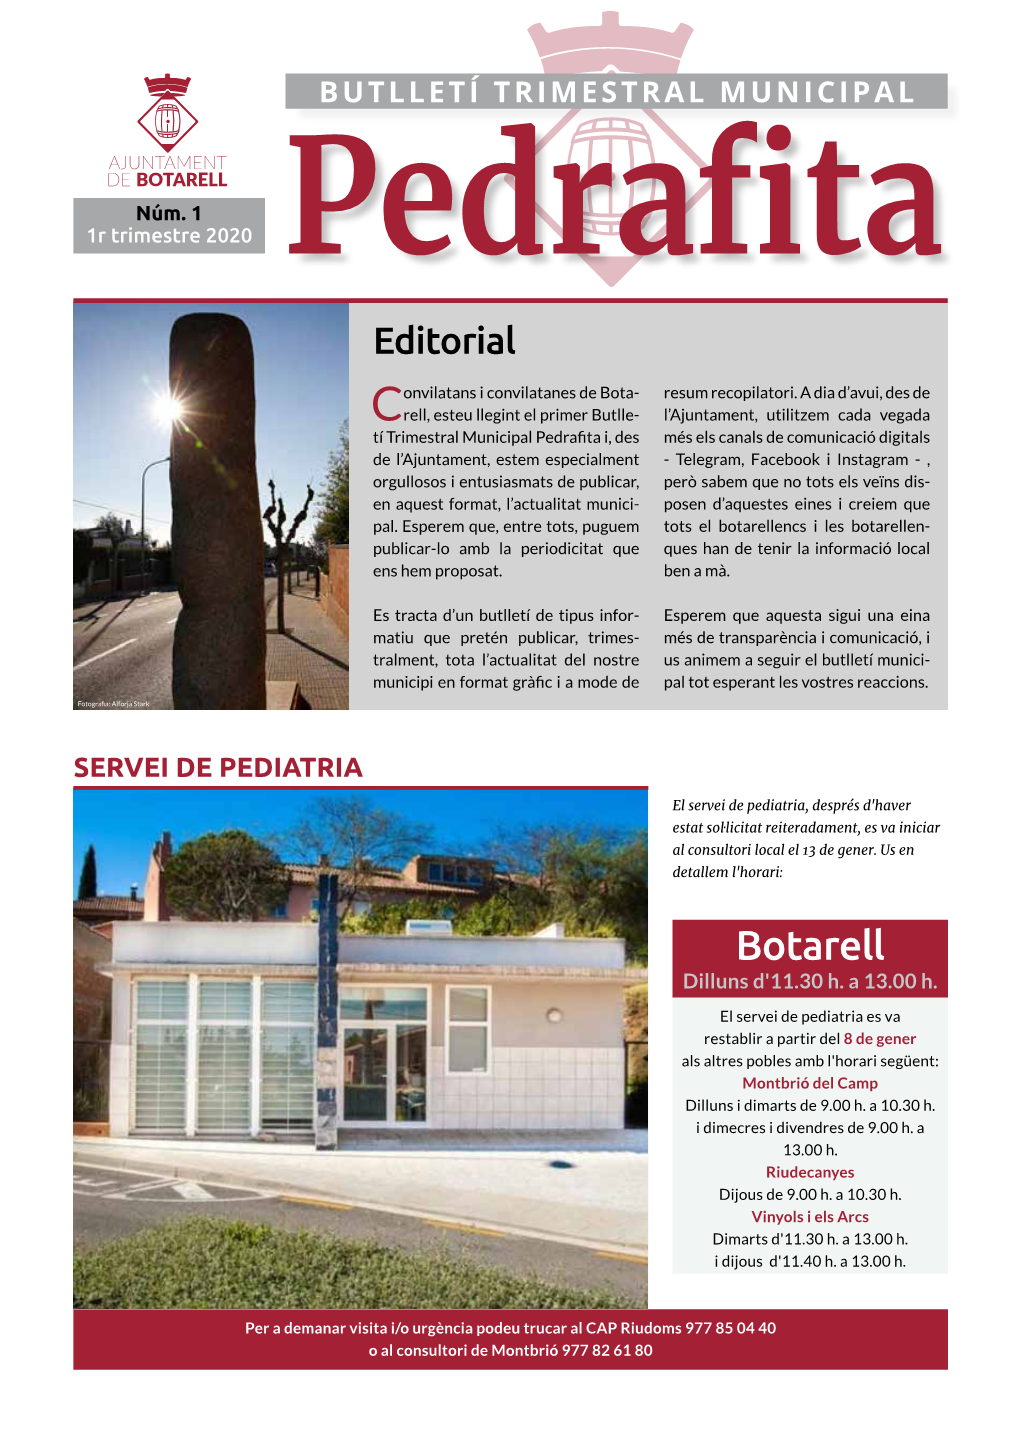 Pedrafita Editorial